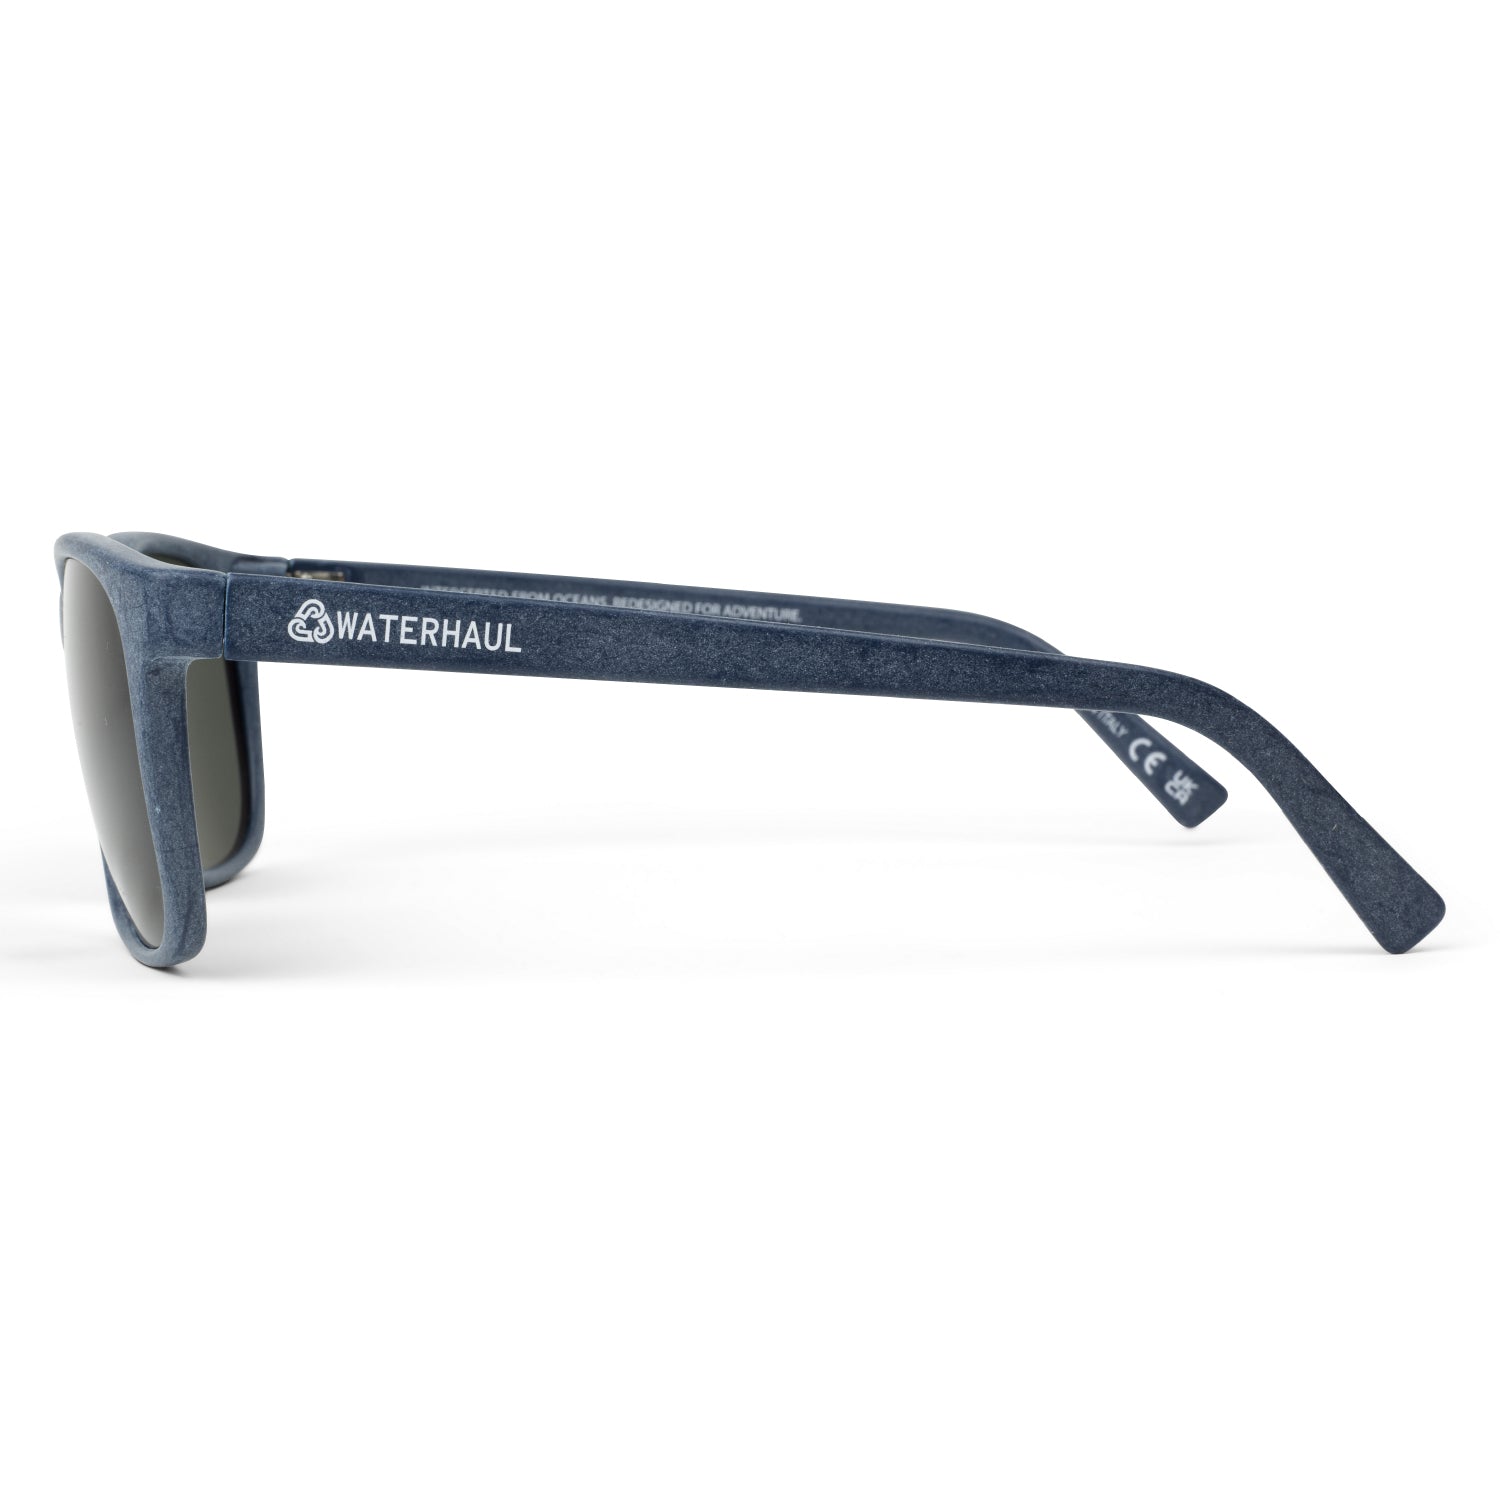 Sunglasses / Glasses Adjustable Retainer Strap (Upcycled Fishing Net)